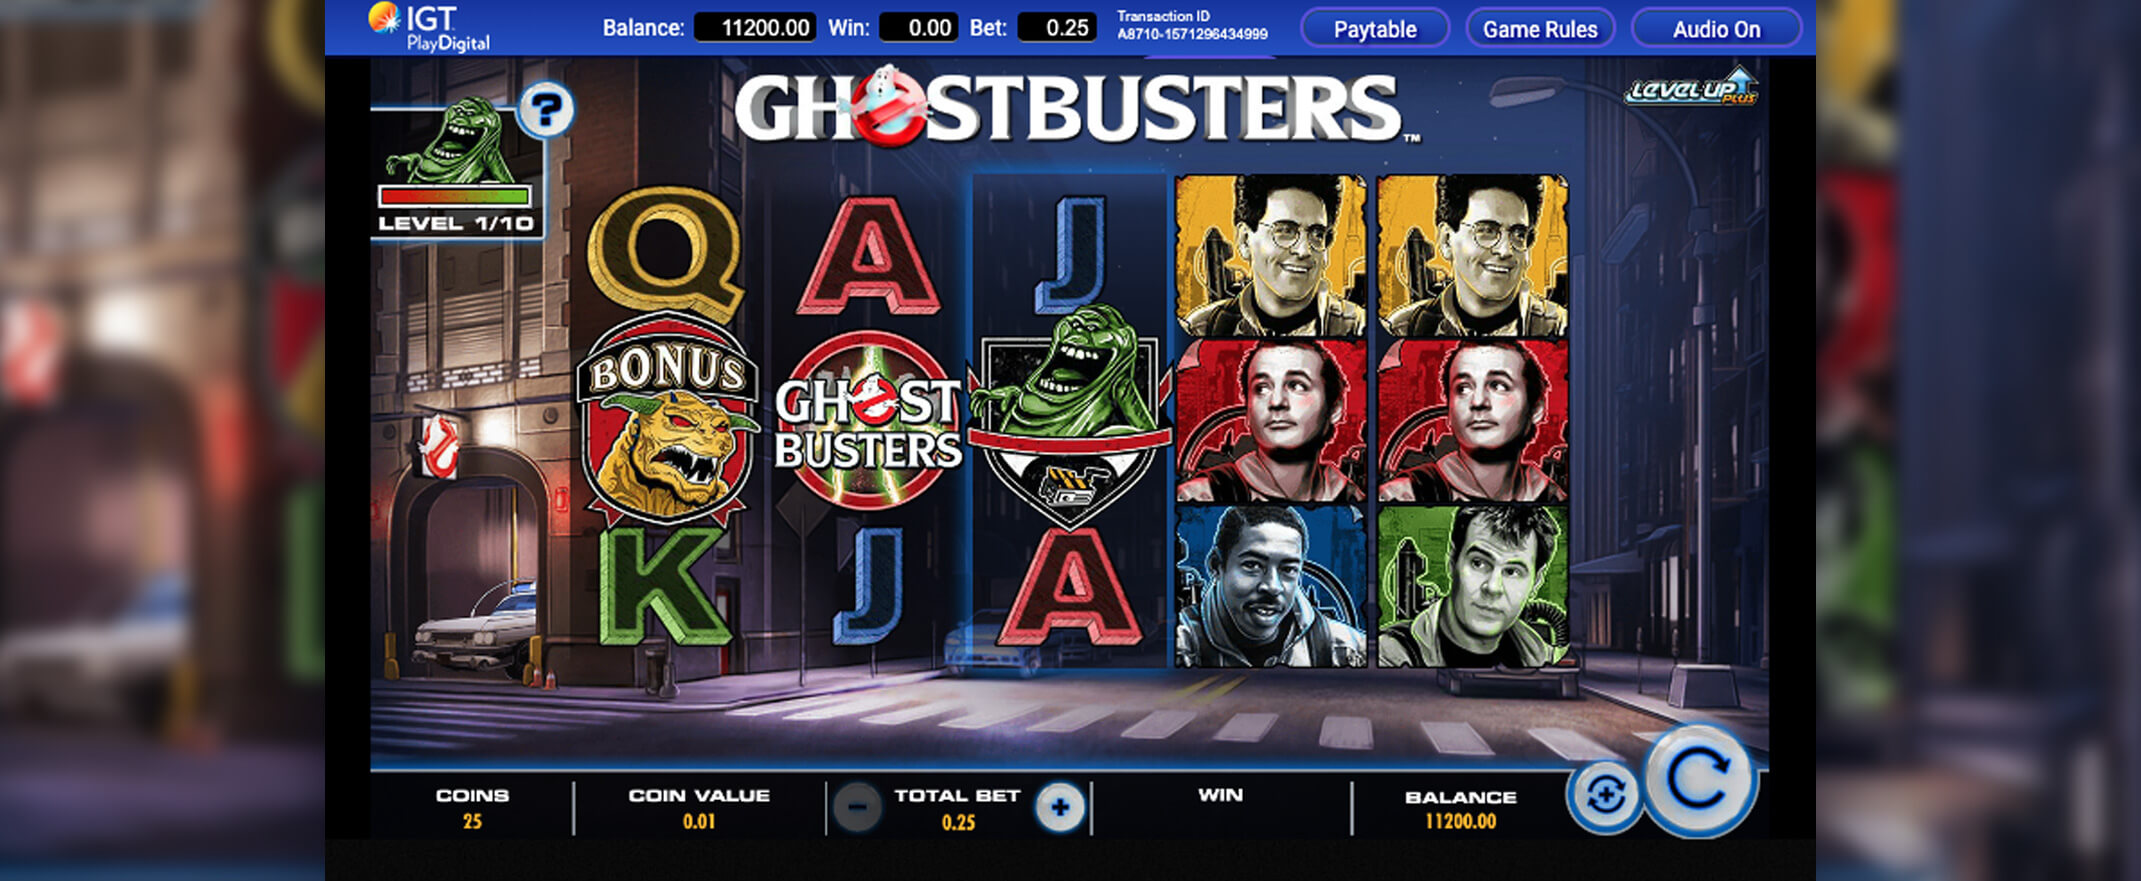 Ghostbusters Level Up Plus peliautomaatti IGT:ltä